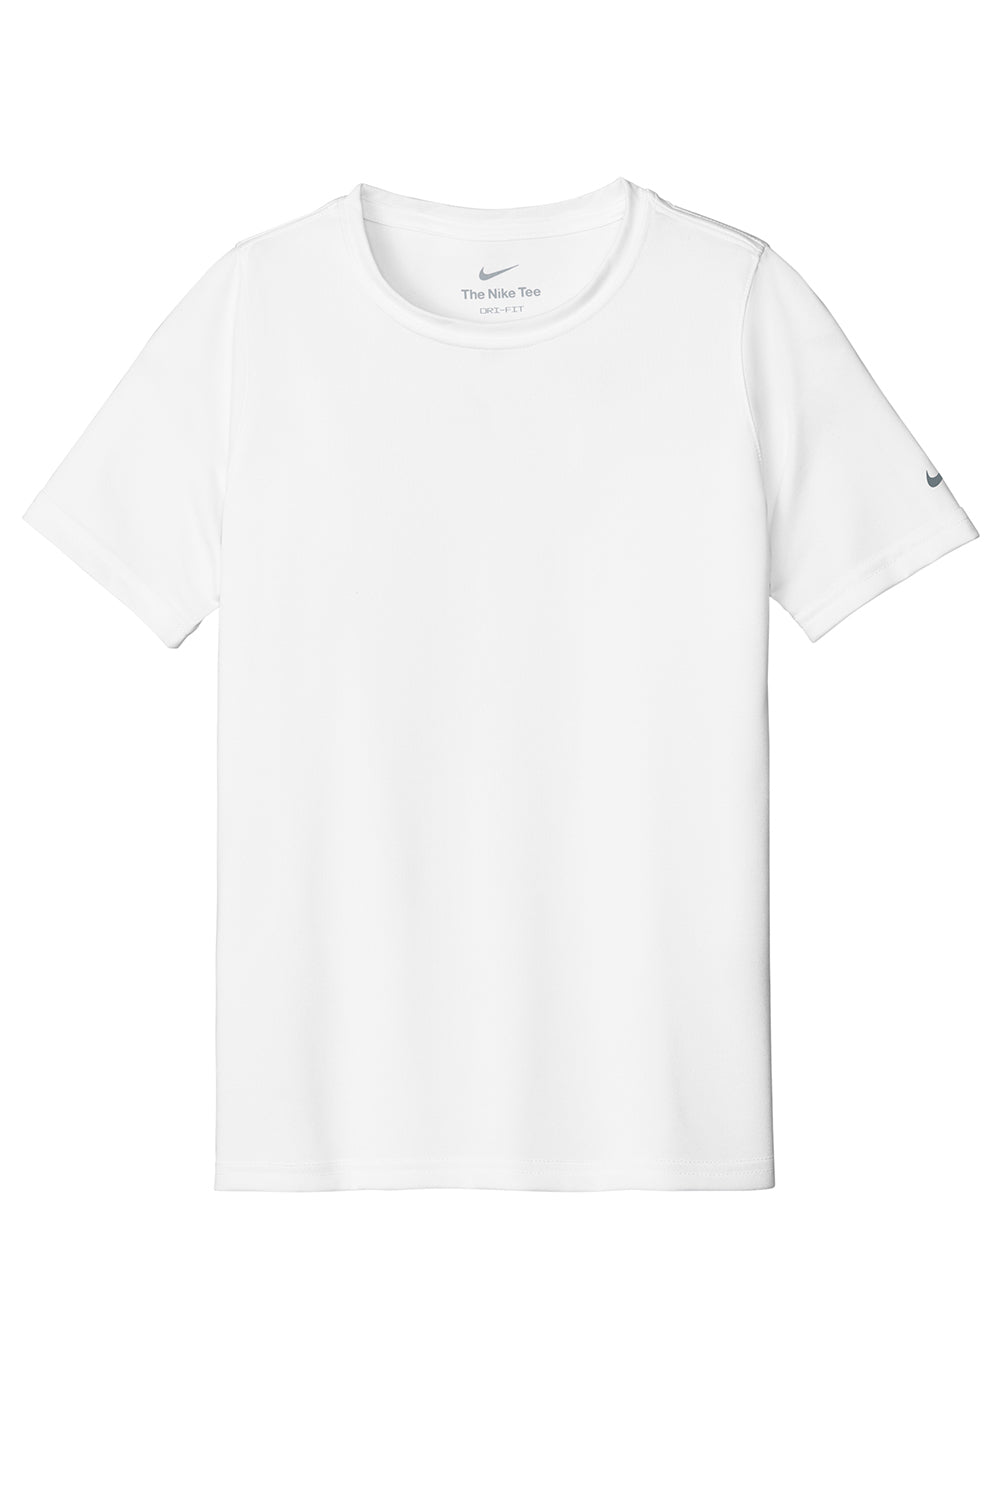 Nike NKDX8787 Youth rLegend Dri-Fit Moisture Wicking Short Sleeve Crewneck T-Shirt White Flat Front